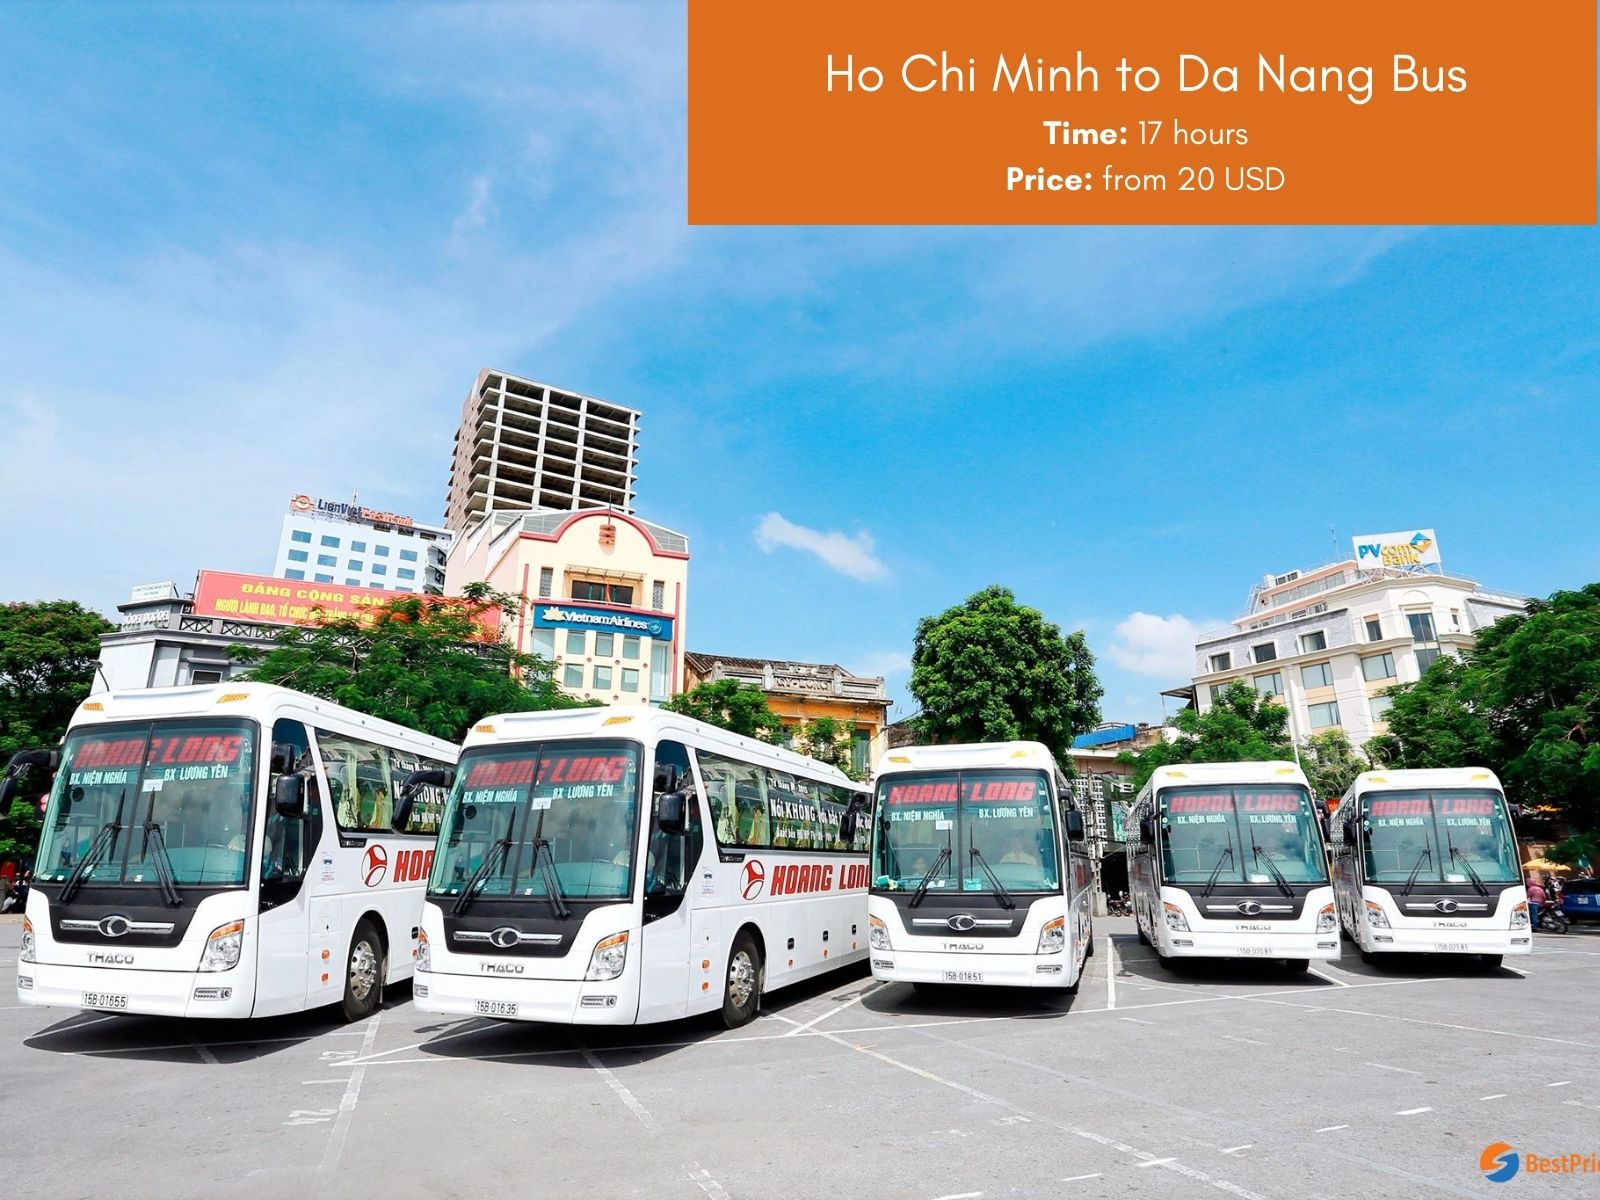 Ho Chi Minh to Da Nang bus